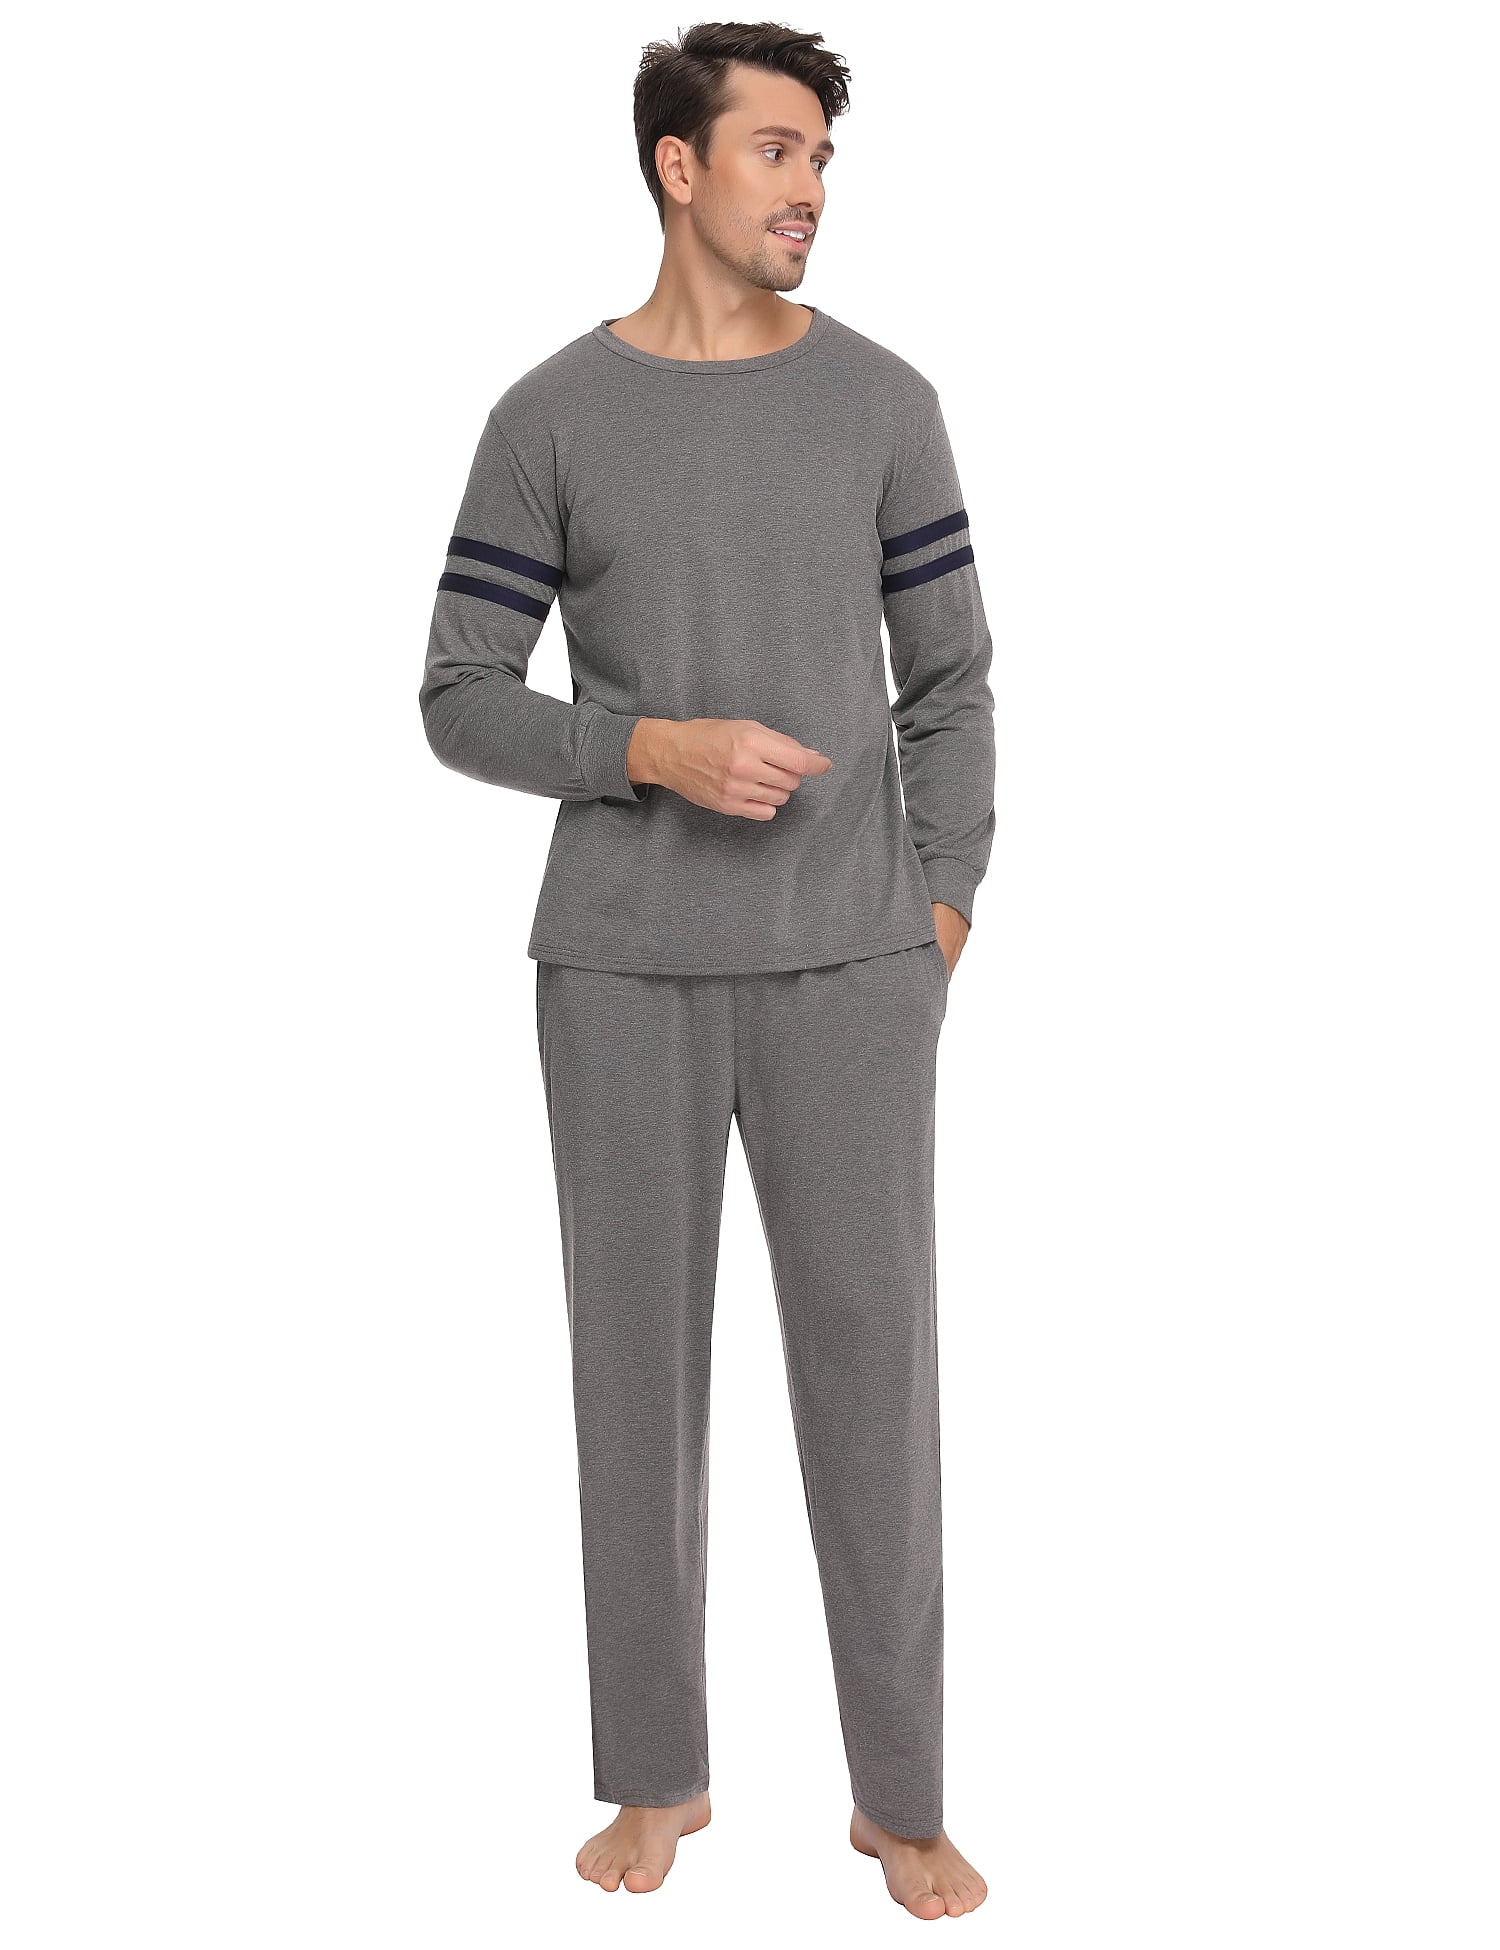 Aibrou Mens Cotton Pajamas Set Long Sleeve Pjs Sleepwear Lounge Set Raglan Shirt and Pants 